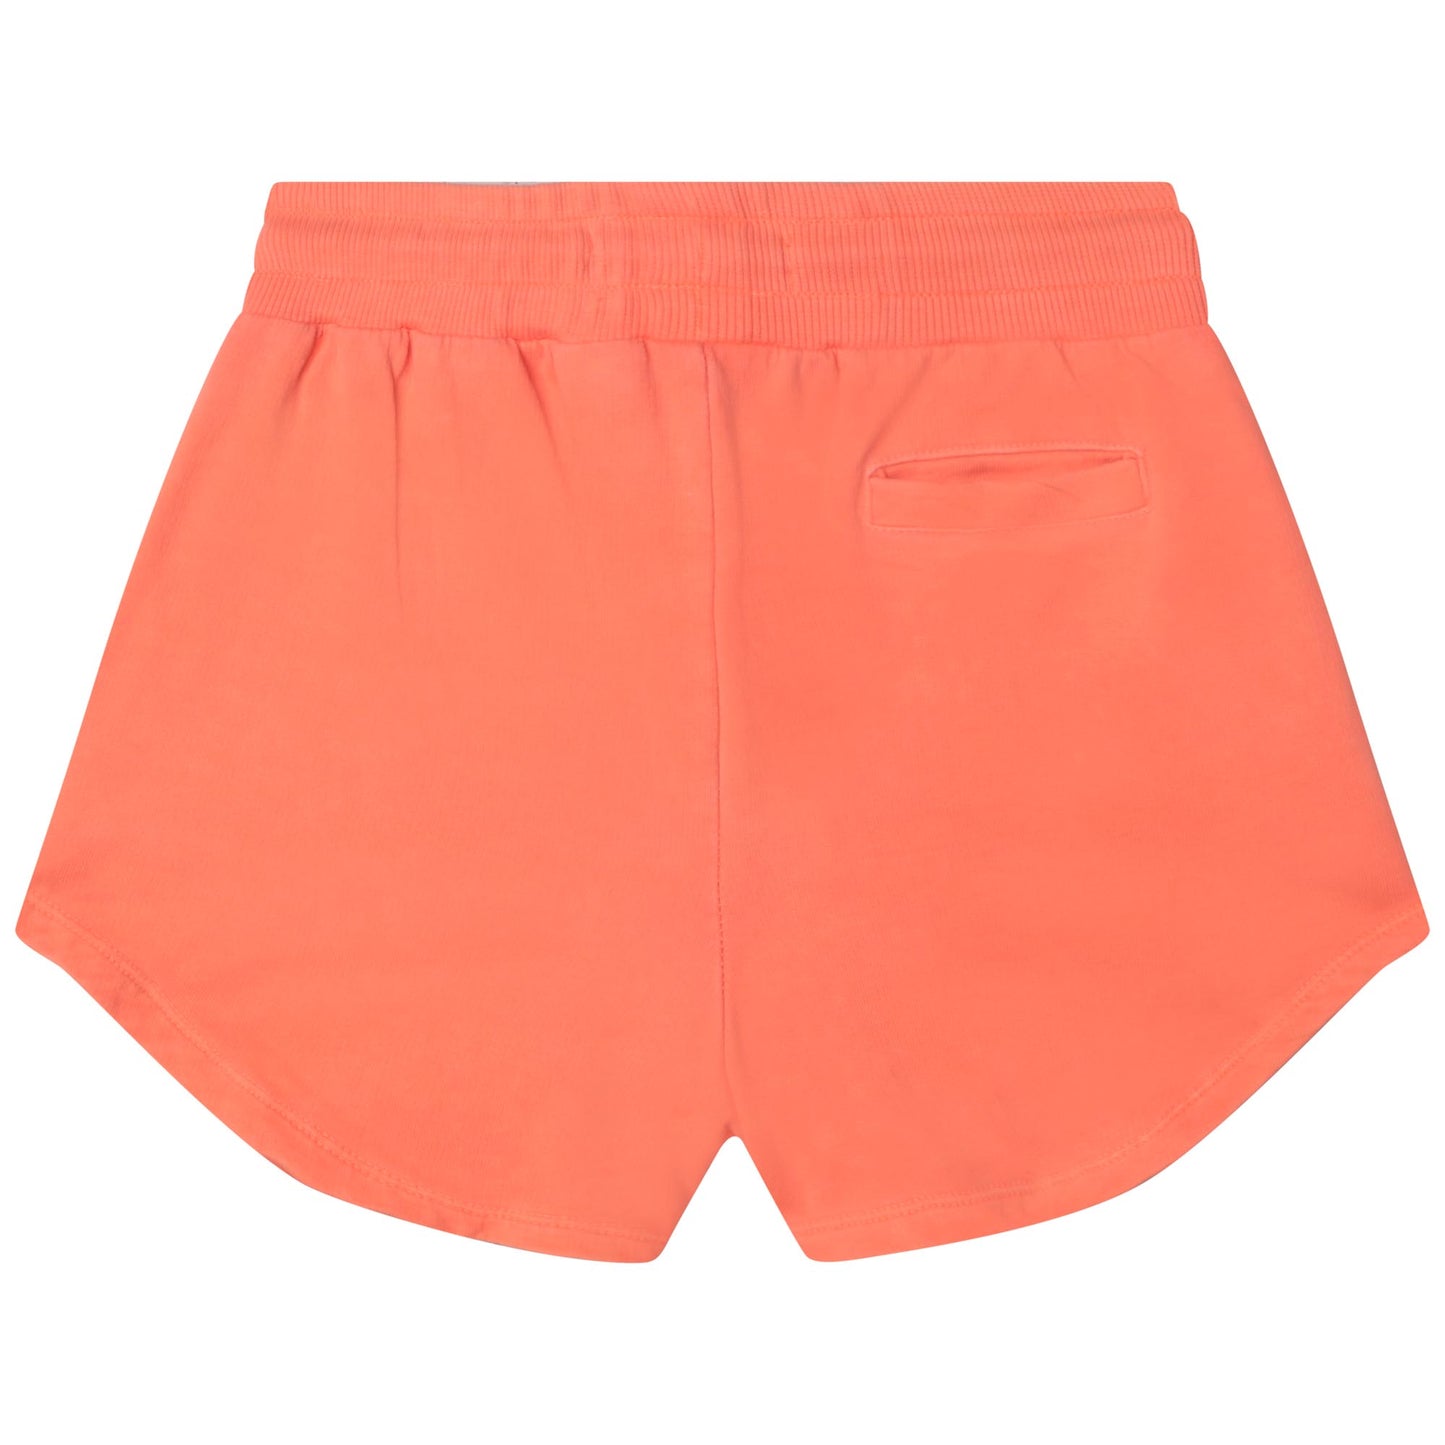 Michael Kors Peach Shorts